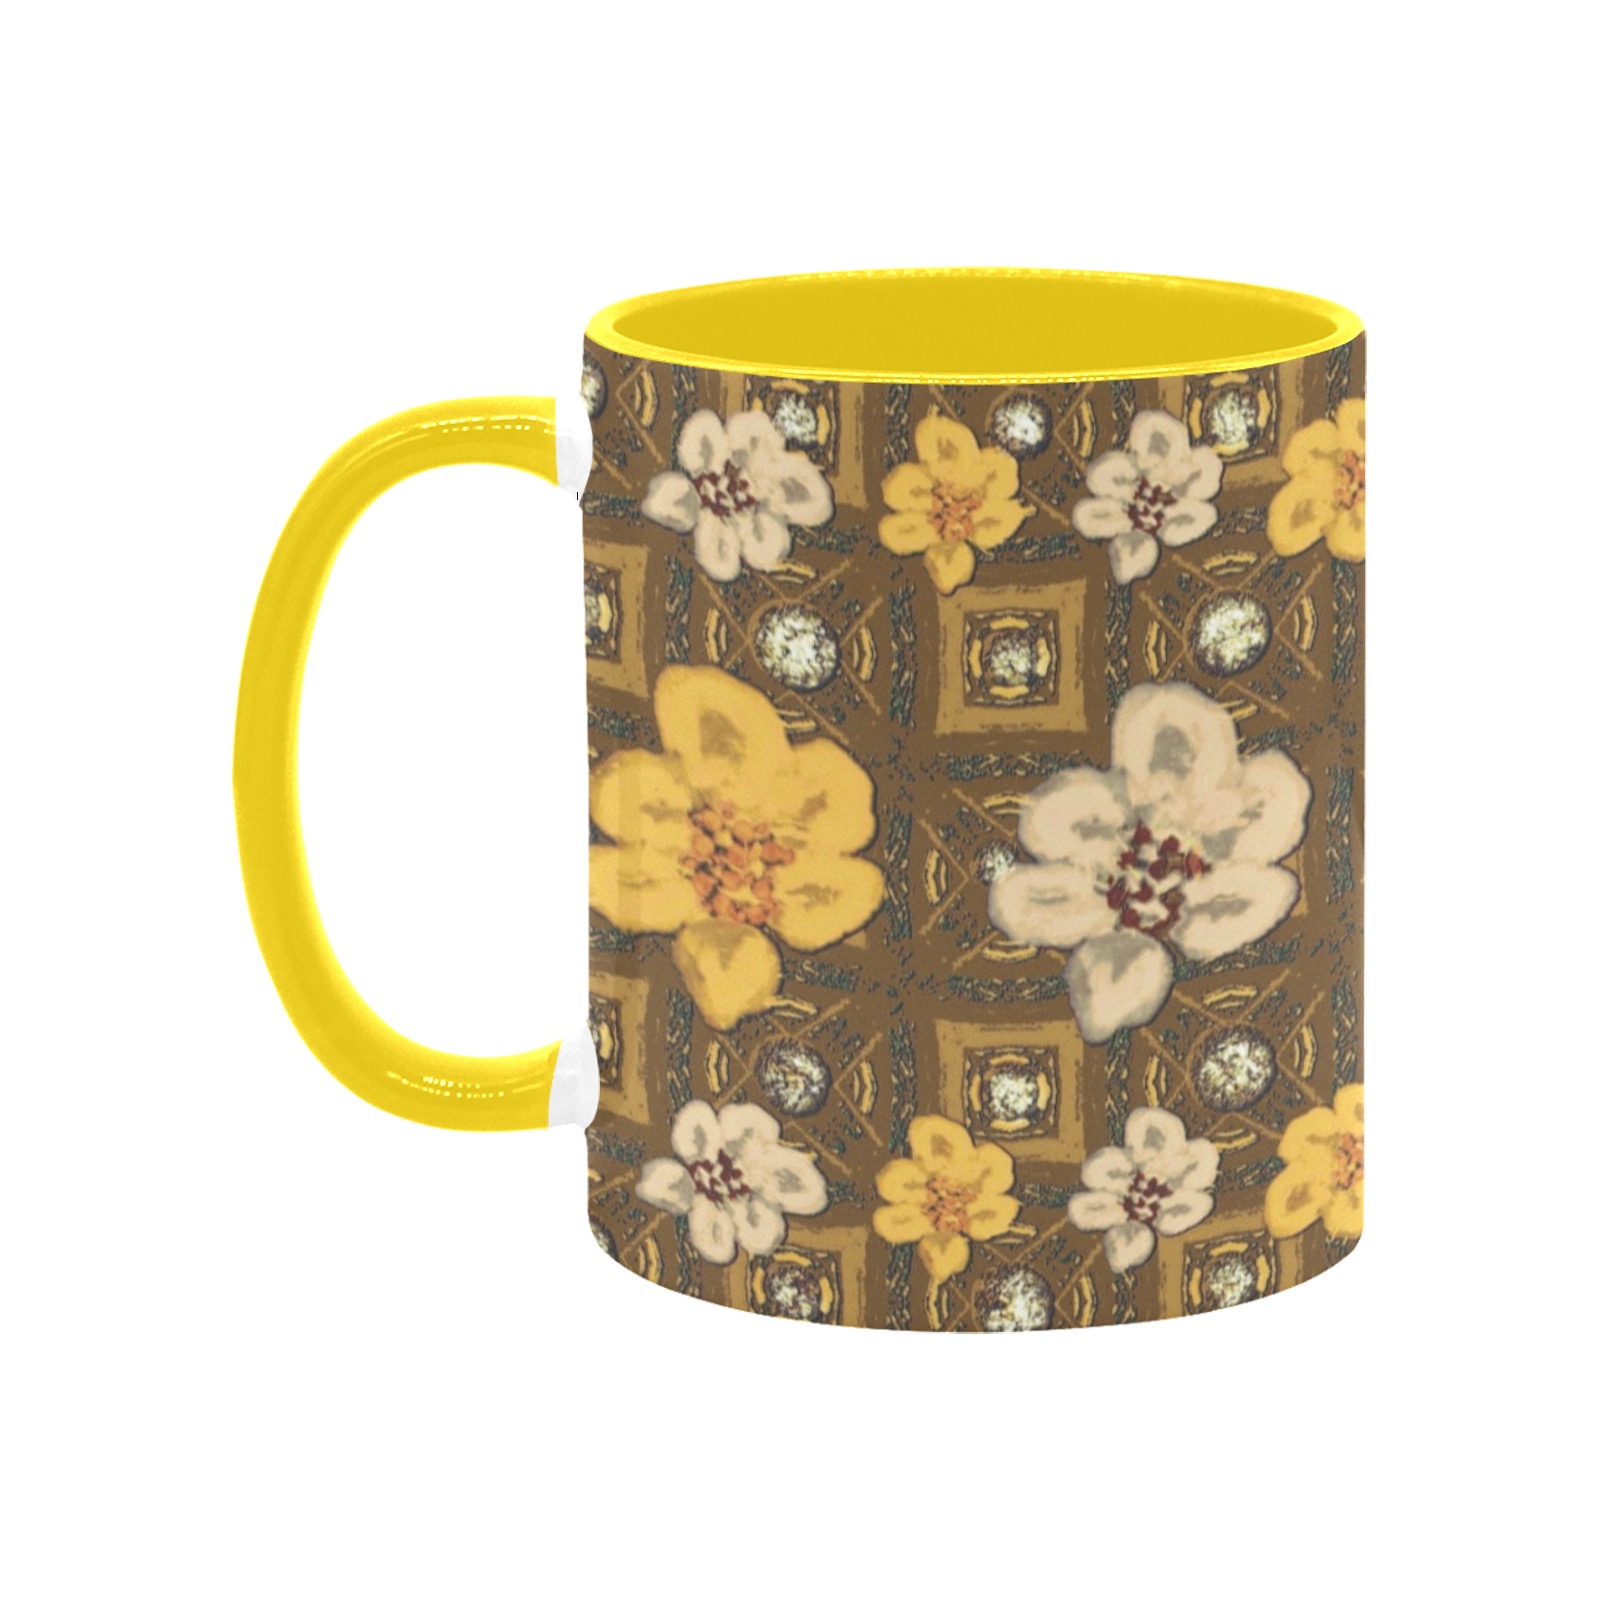 A taste of yellow-floral Custom Inner Color Mug (11oz)